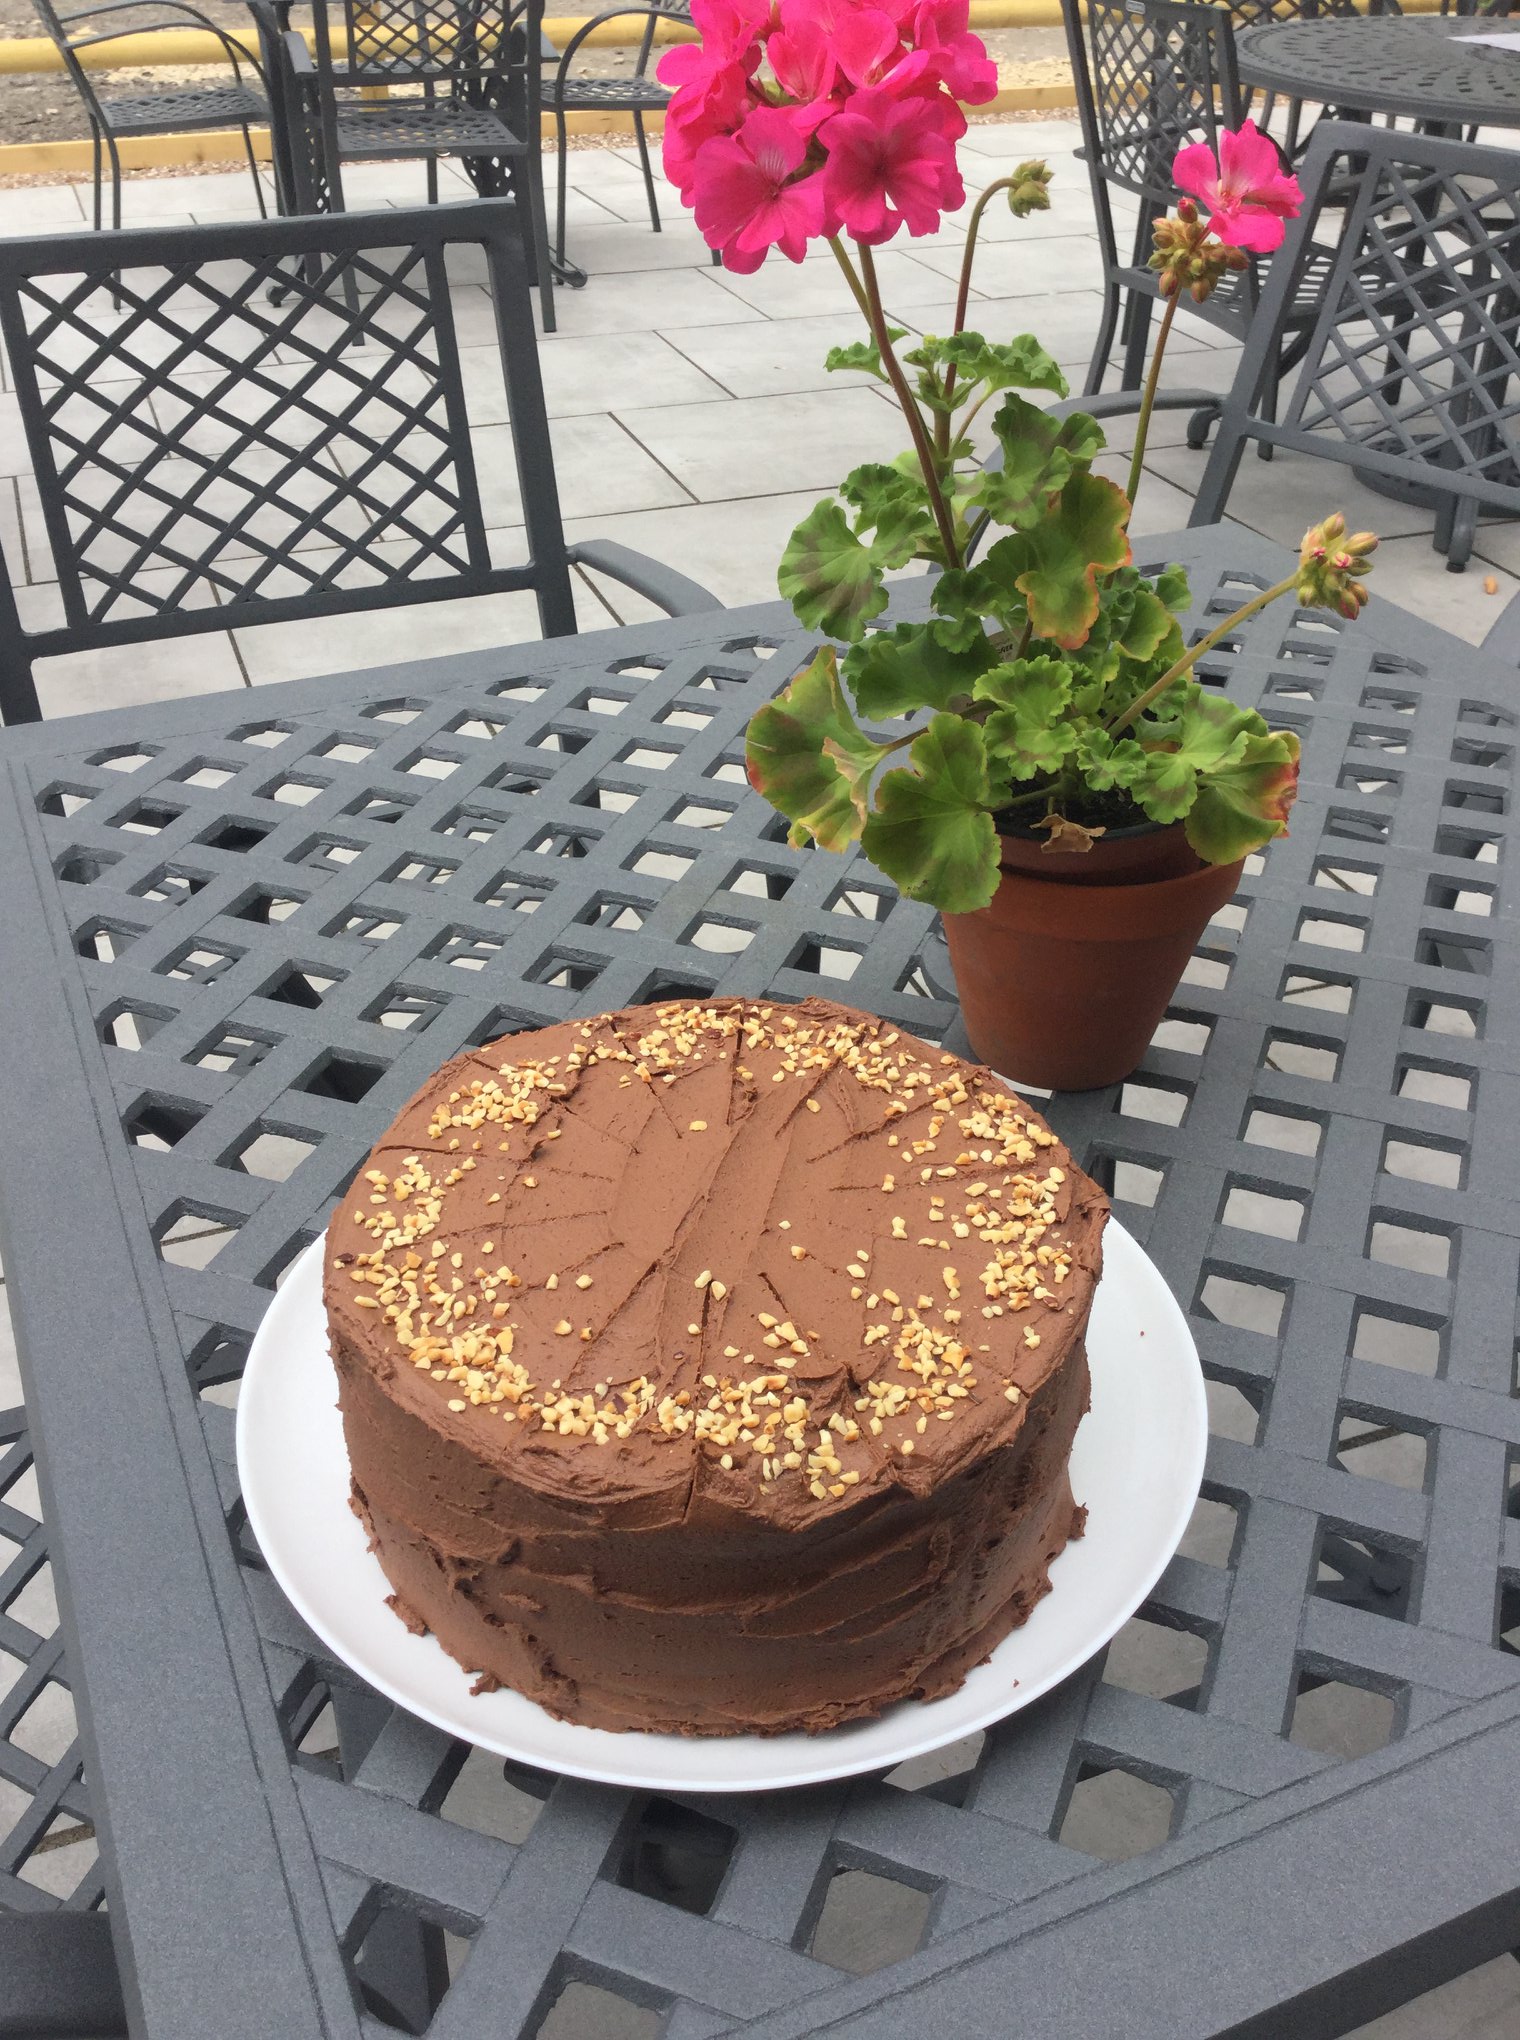 You can enjoy a slice of cake on our garden tables at Chadbury Farm Shop